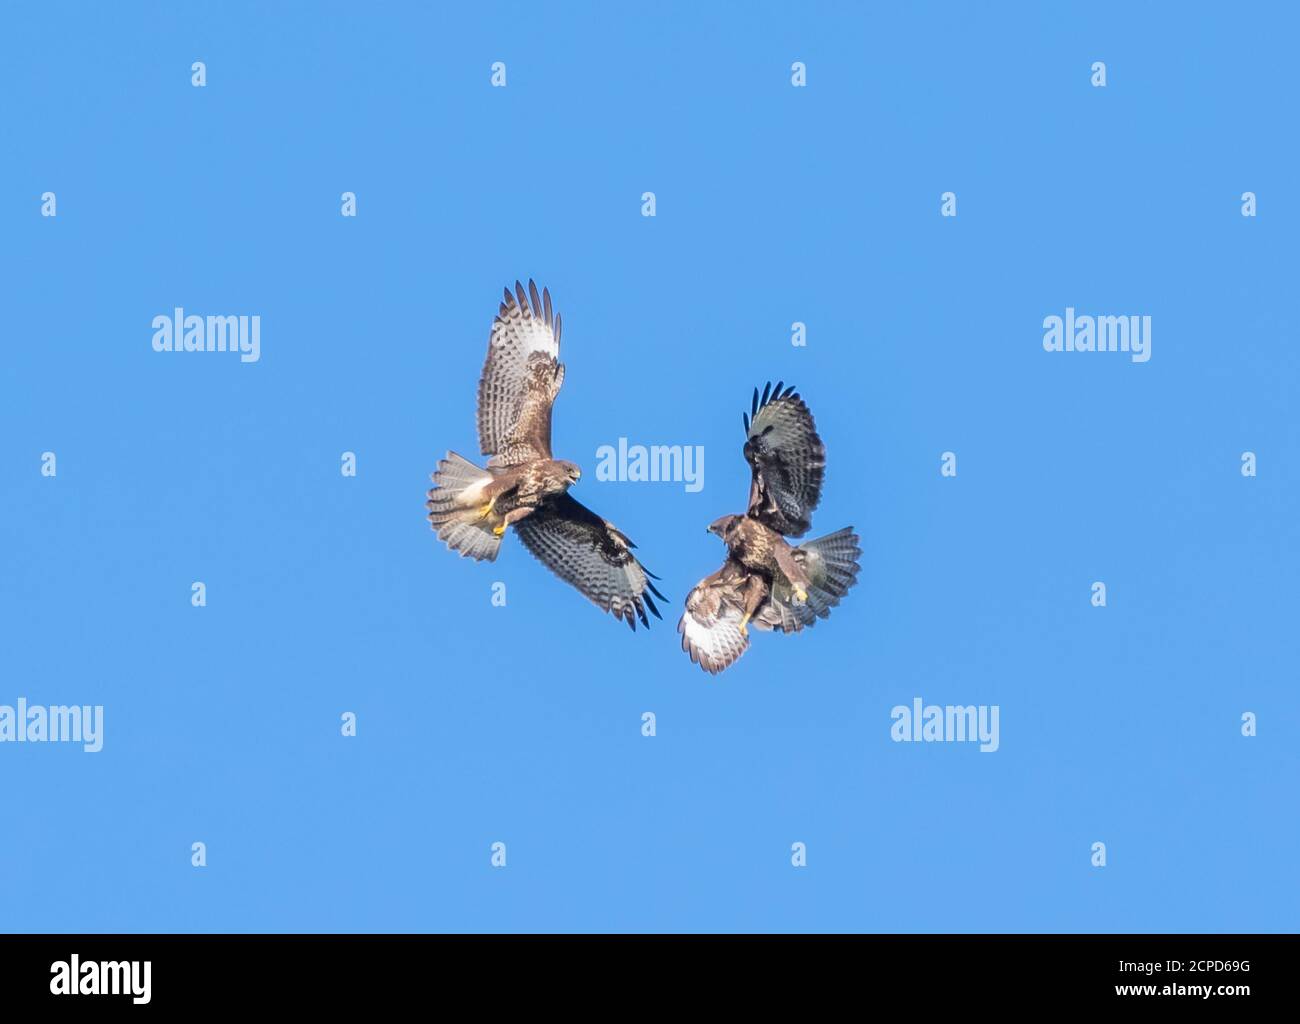 Pair of Buzzard birds (Buteo buteo), birds of prey, in flight, play fighting. Buzzards flying against blue sky in West Sussex, England, UK. Stock Photo